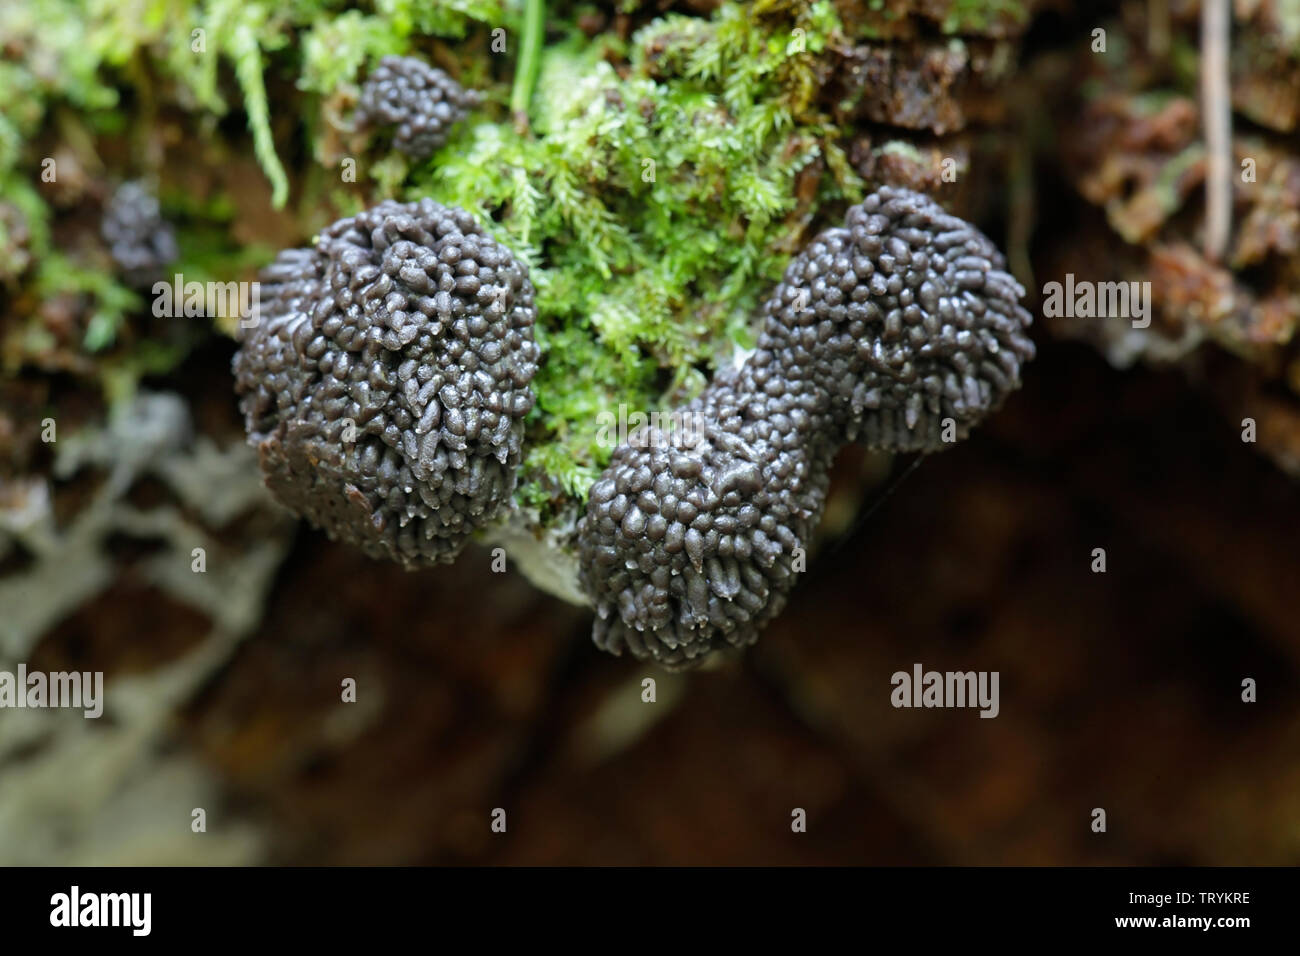 Raspberry slime mold, Tubifera ferruginosa Stock Photo